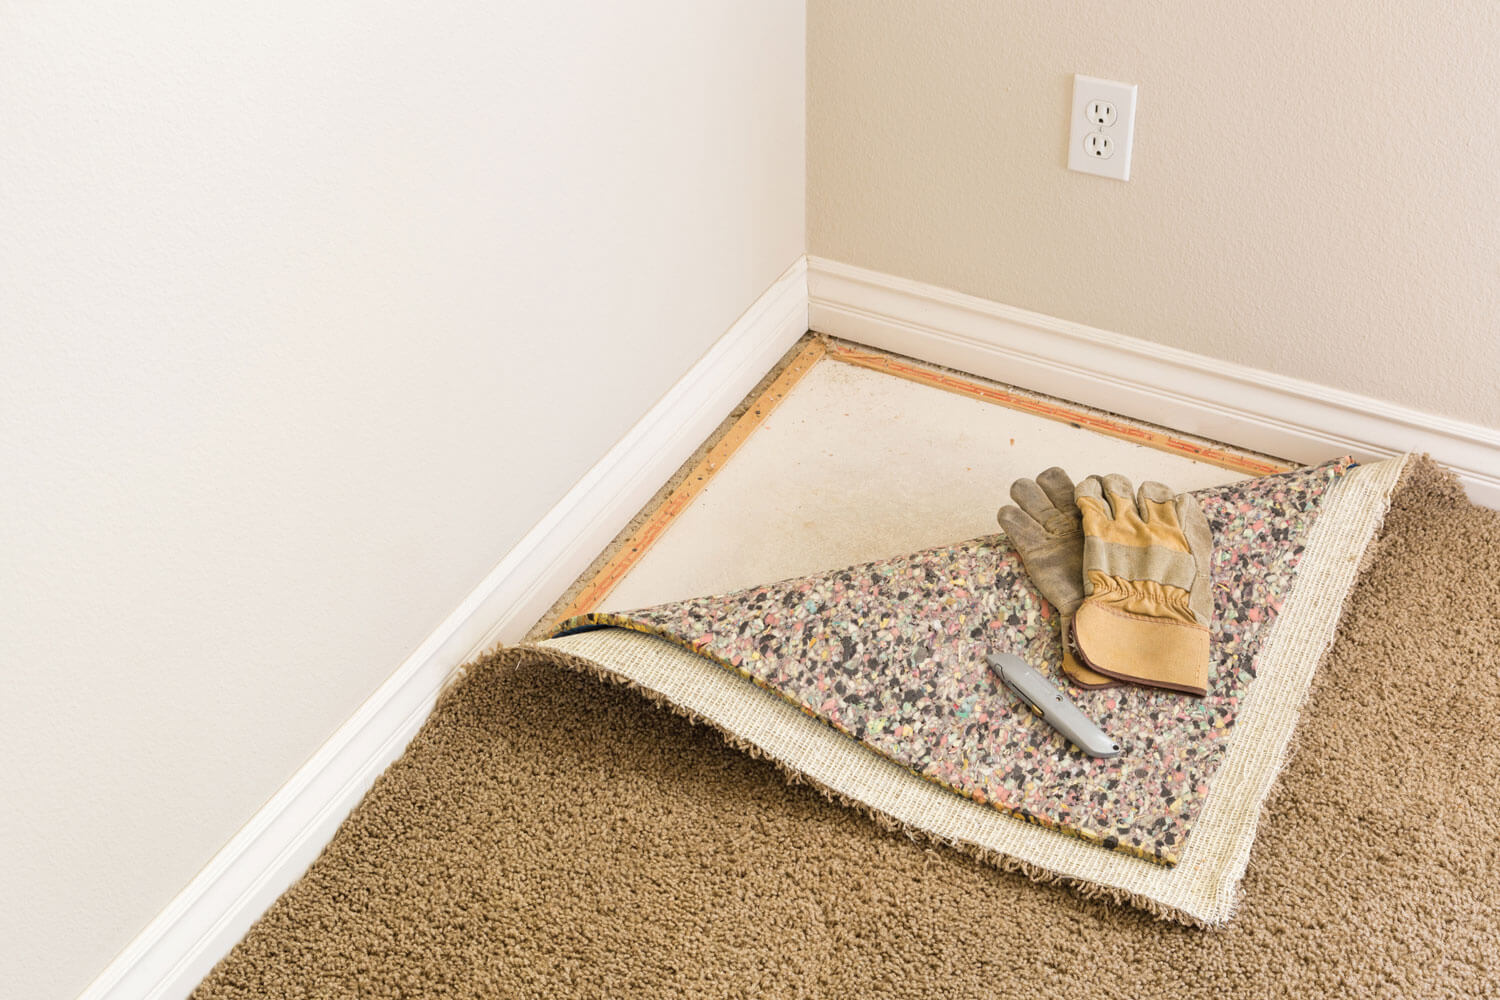 How To Fix Squeaky Floorboards Under Carpet